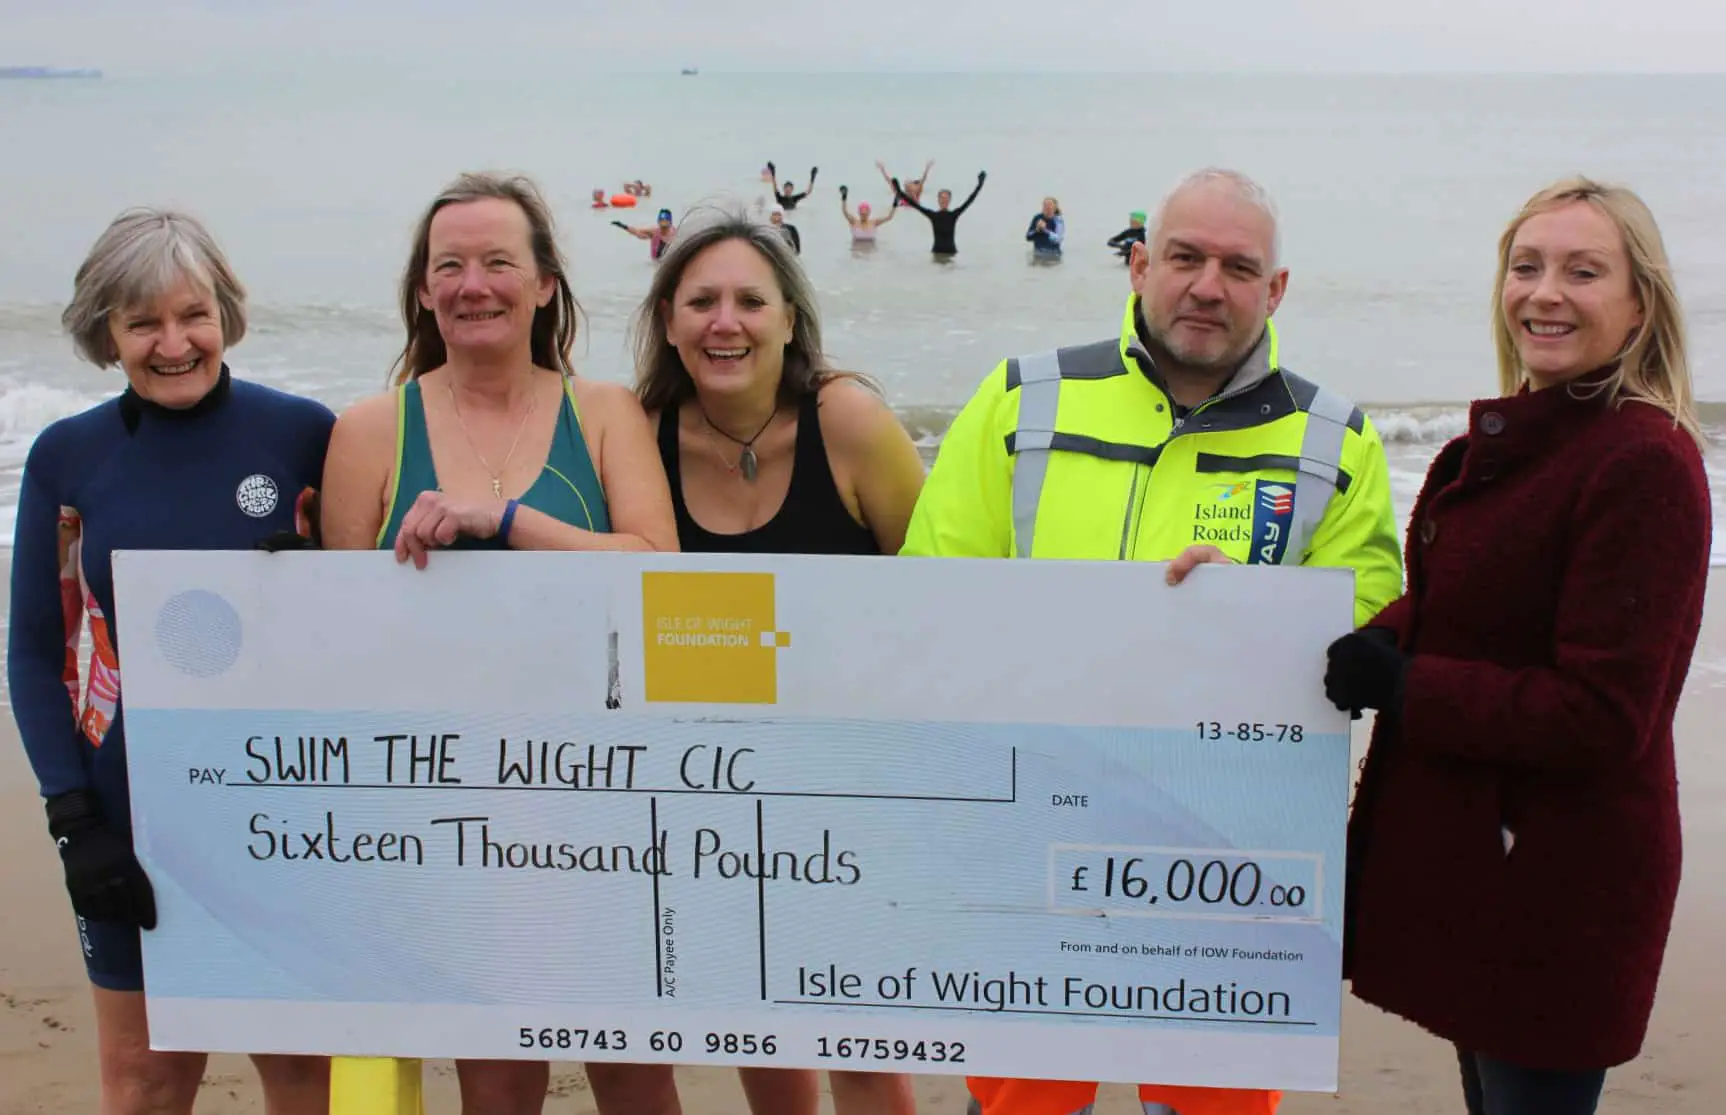 Swim the Wight’s Sue Barker, Victoria Thorneton-Field, Liz Hennessy with Richard Slinn (Island Roads) and Samantha O’Rourke (Isle of Wight Foundation and Island Roads)